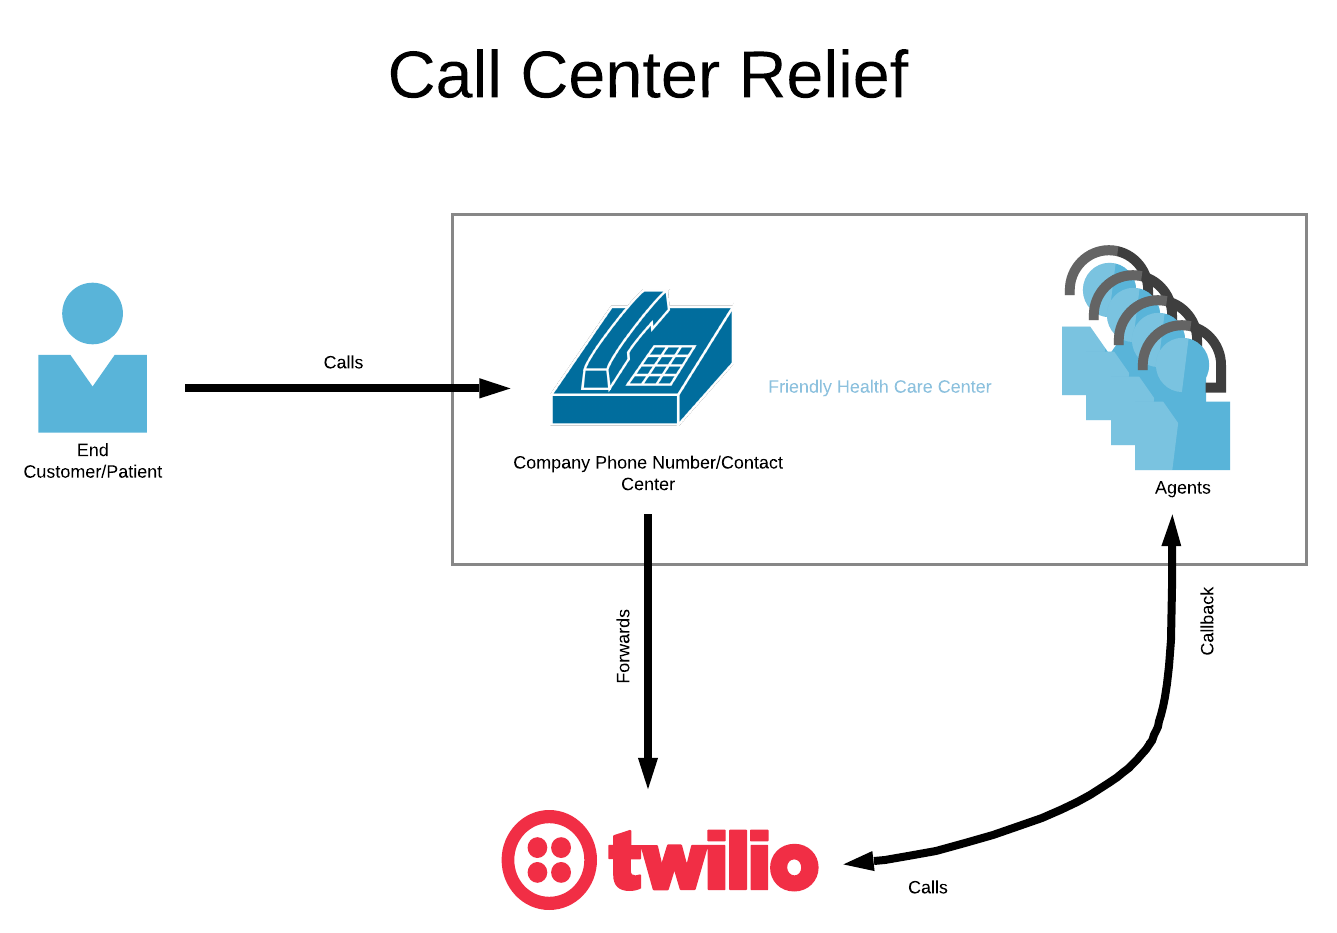 Call Center Relief architectural diagram